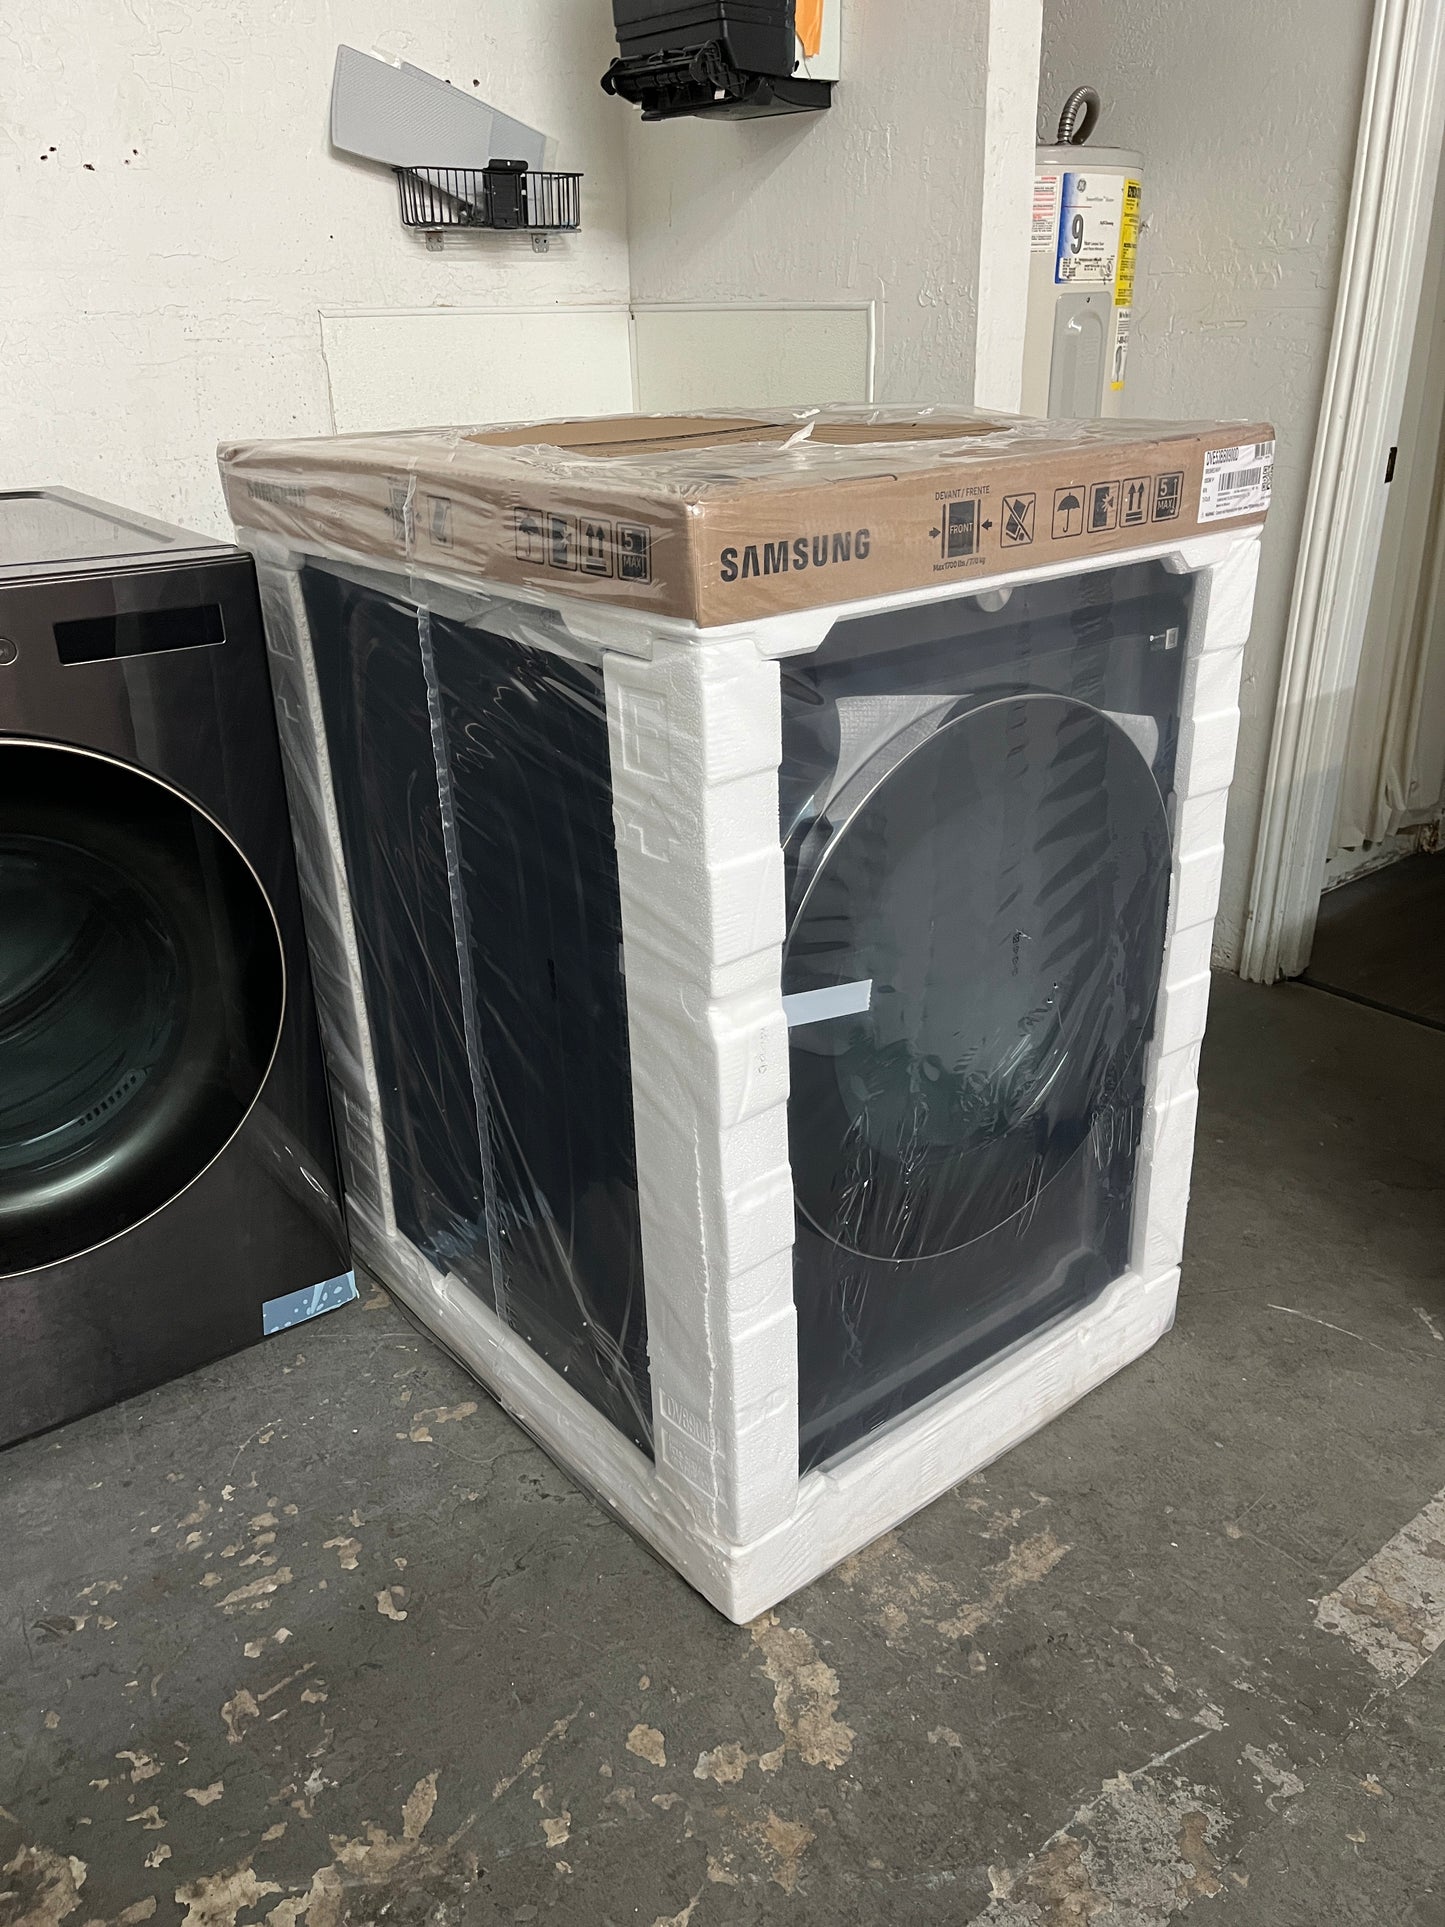 Samsung 7.6 cu ft Electric Dryer